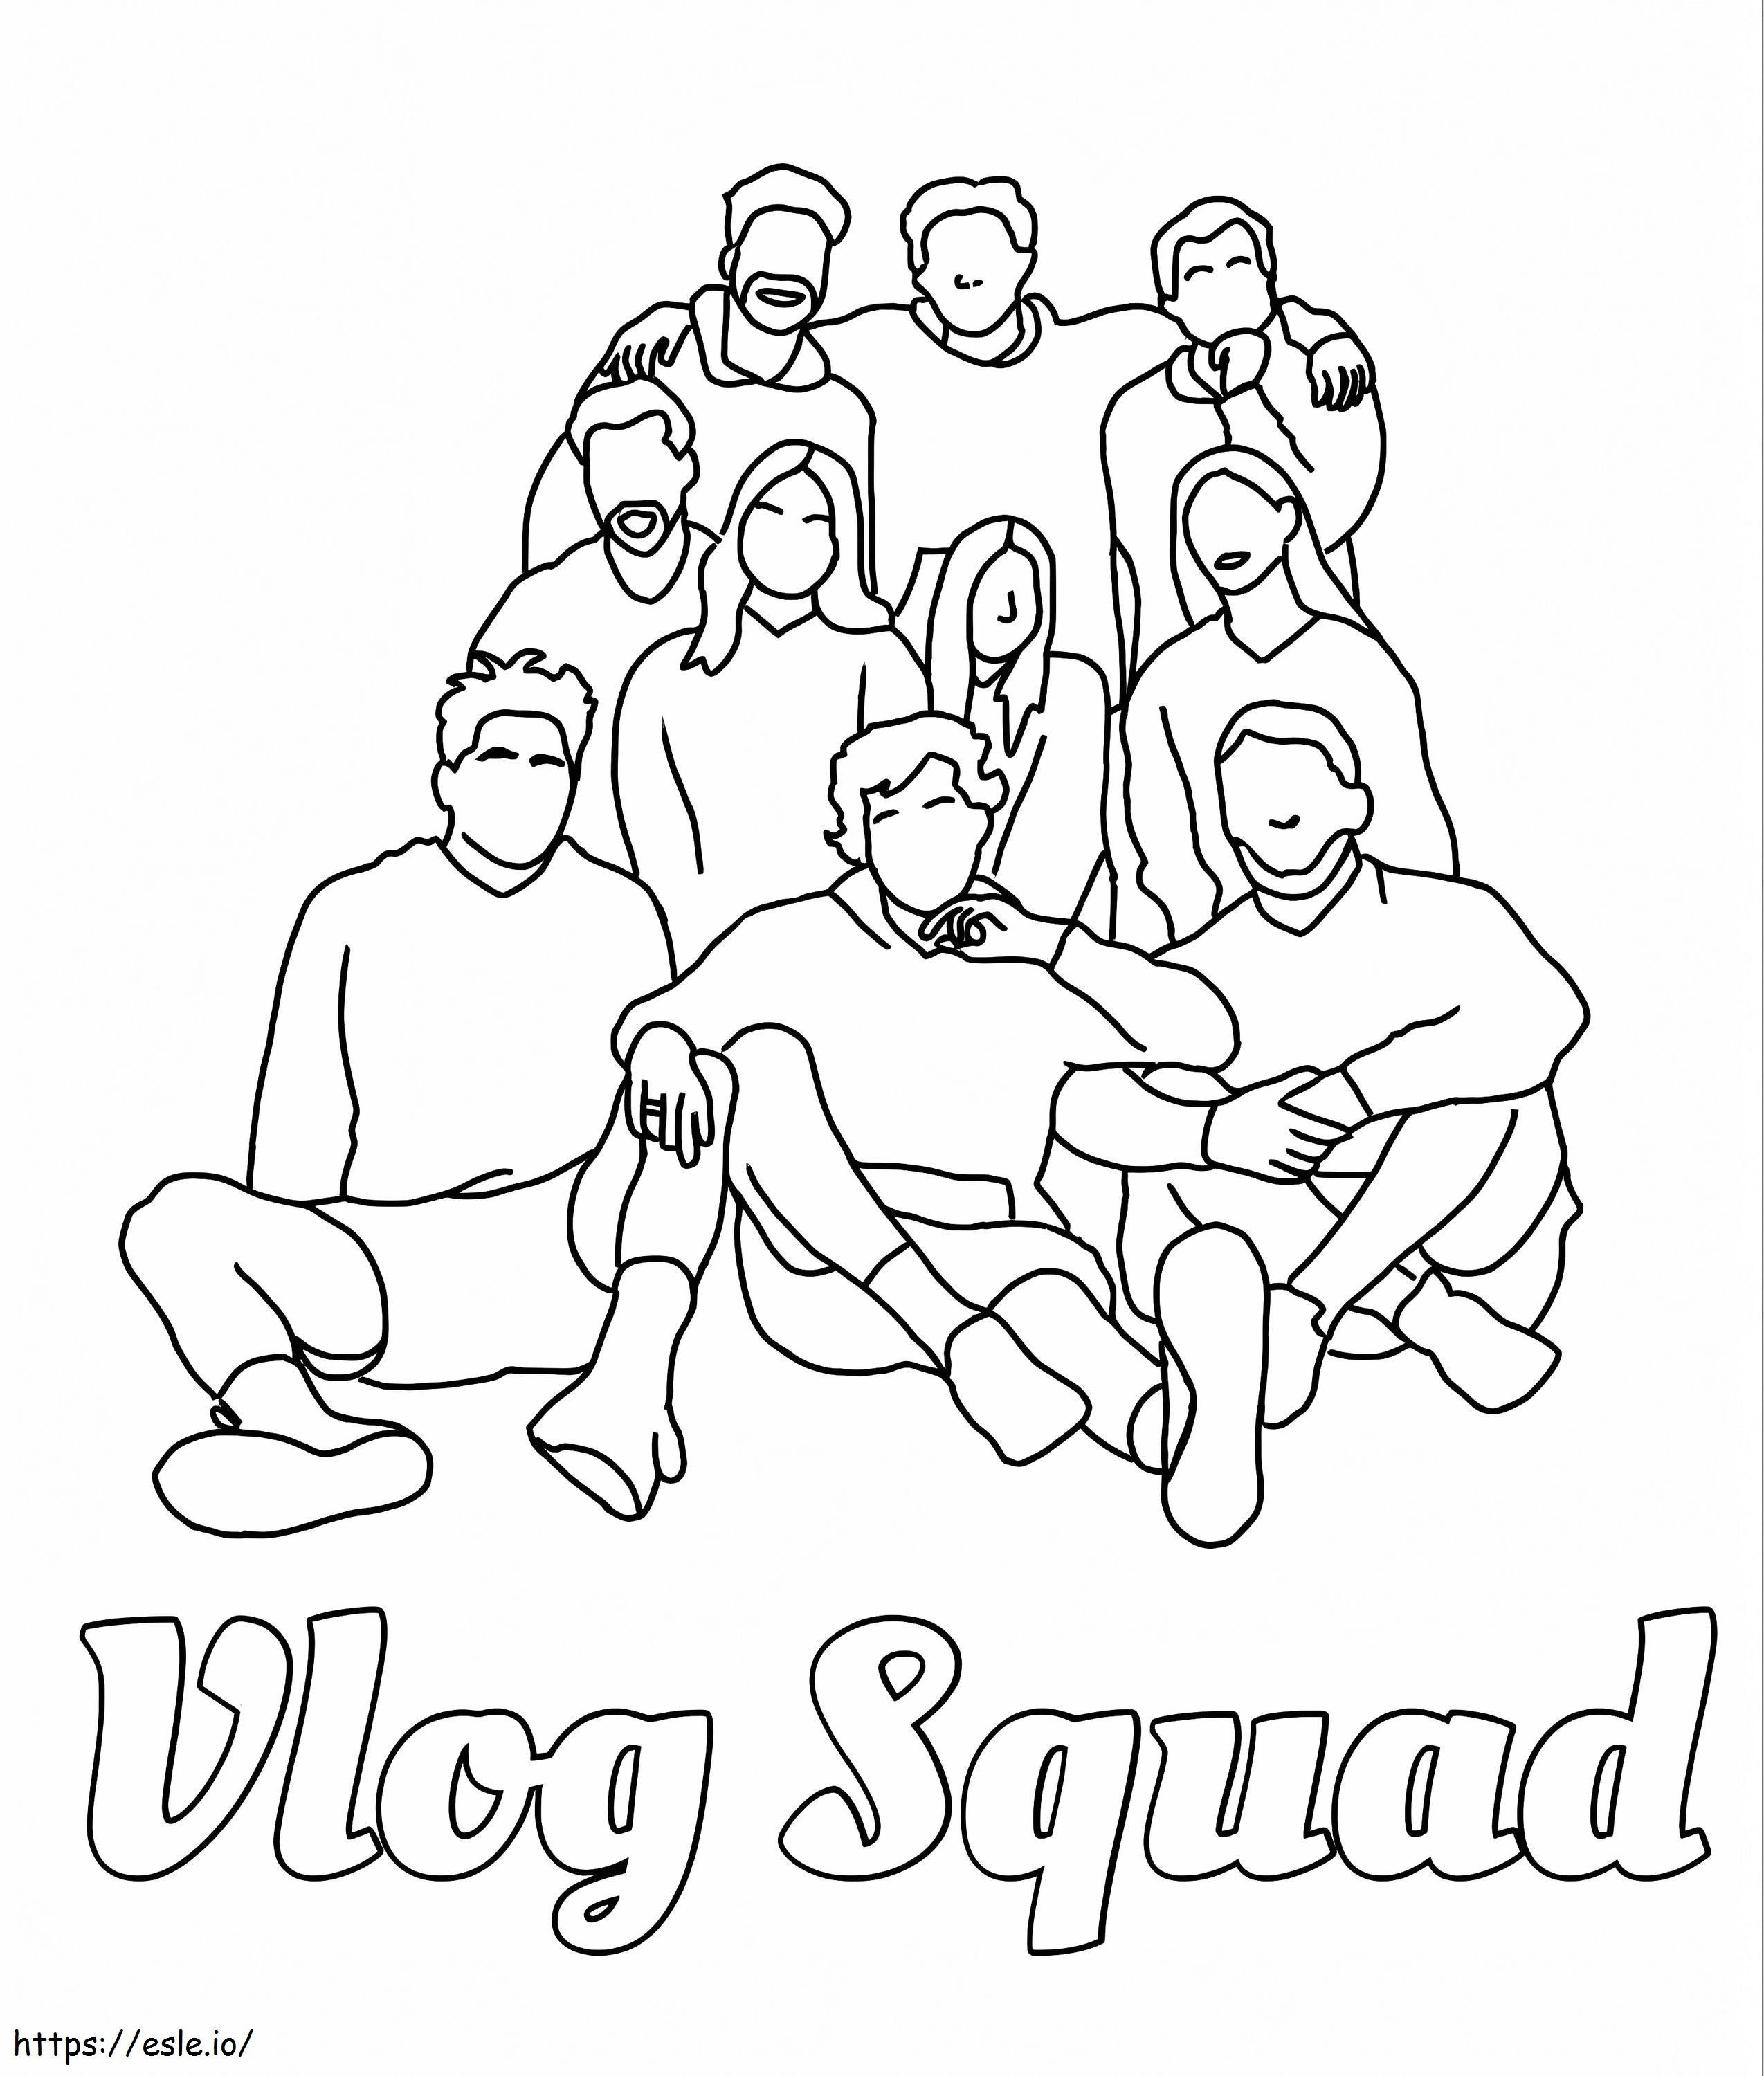 Vlog Squad TikTok ausmalbilder